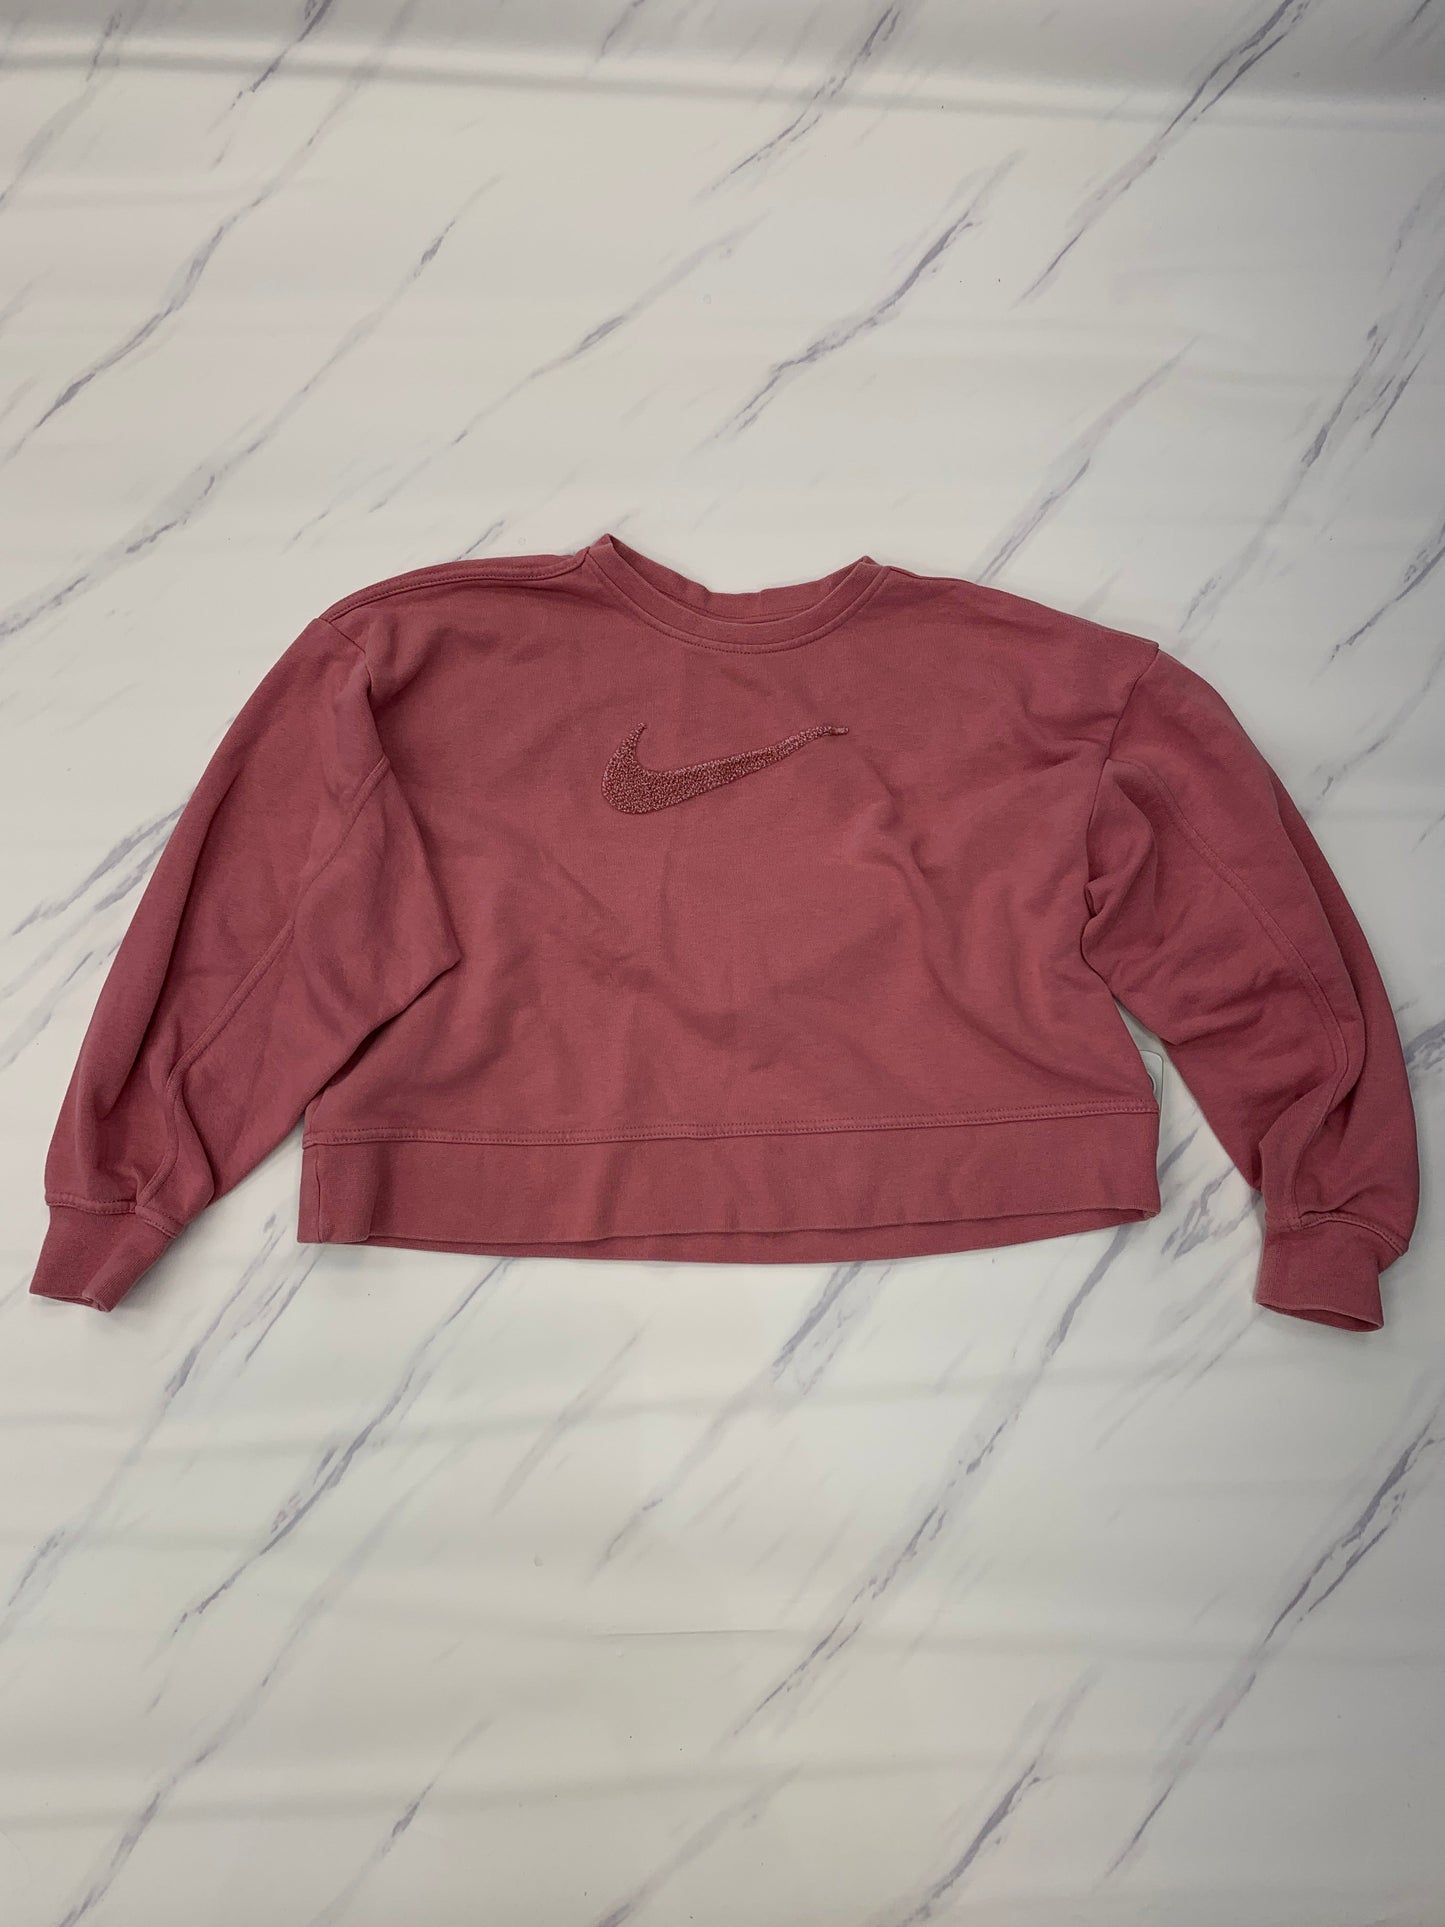 Athletic Sweatshirt Crewneck Nike Apparel, Size S